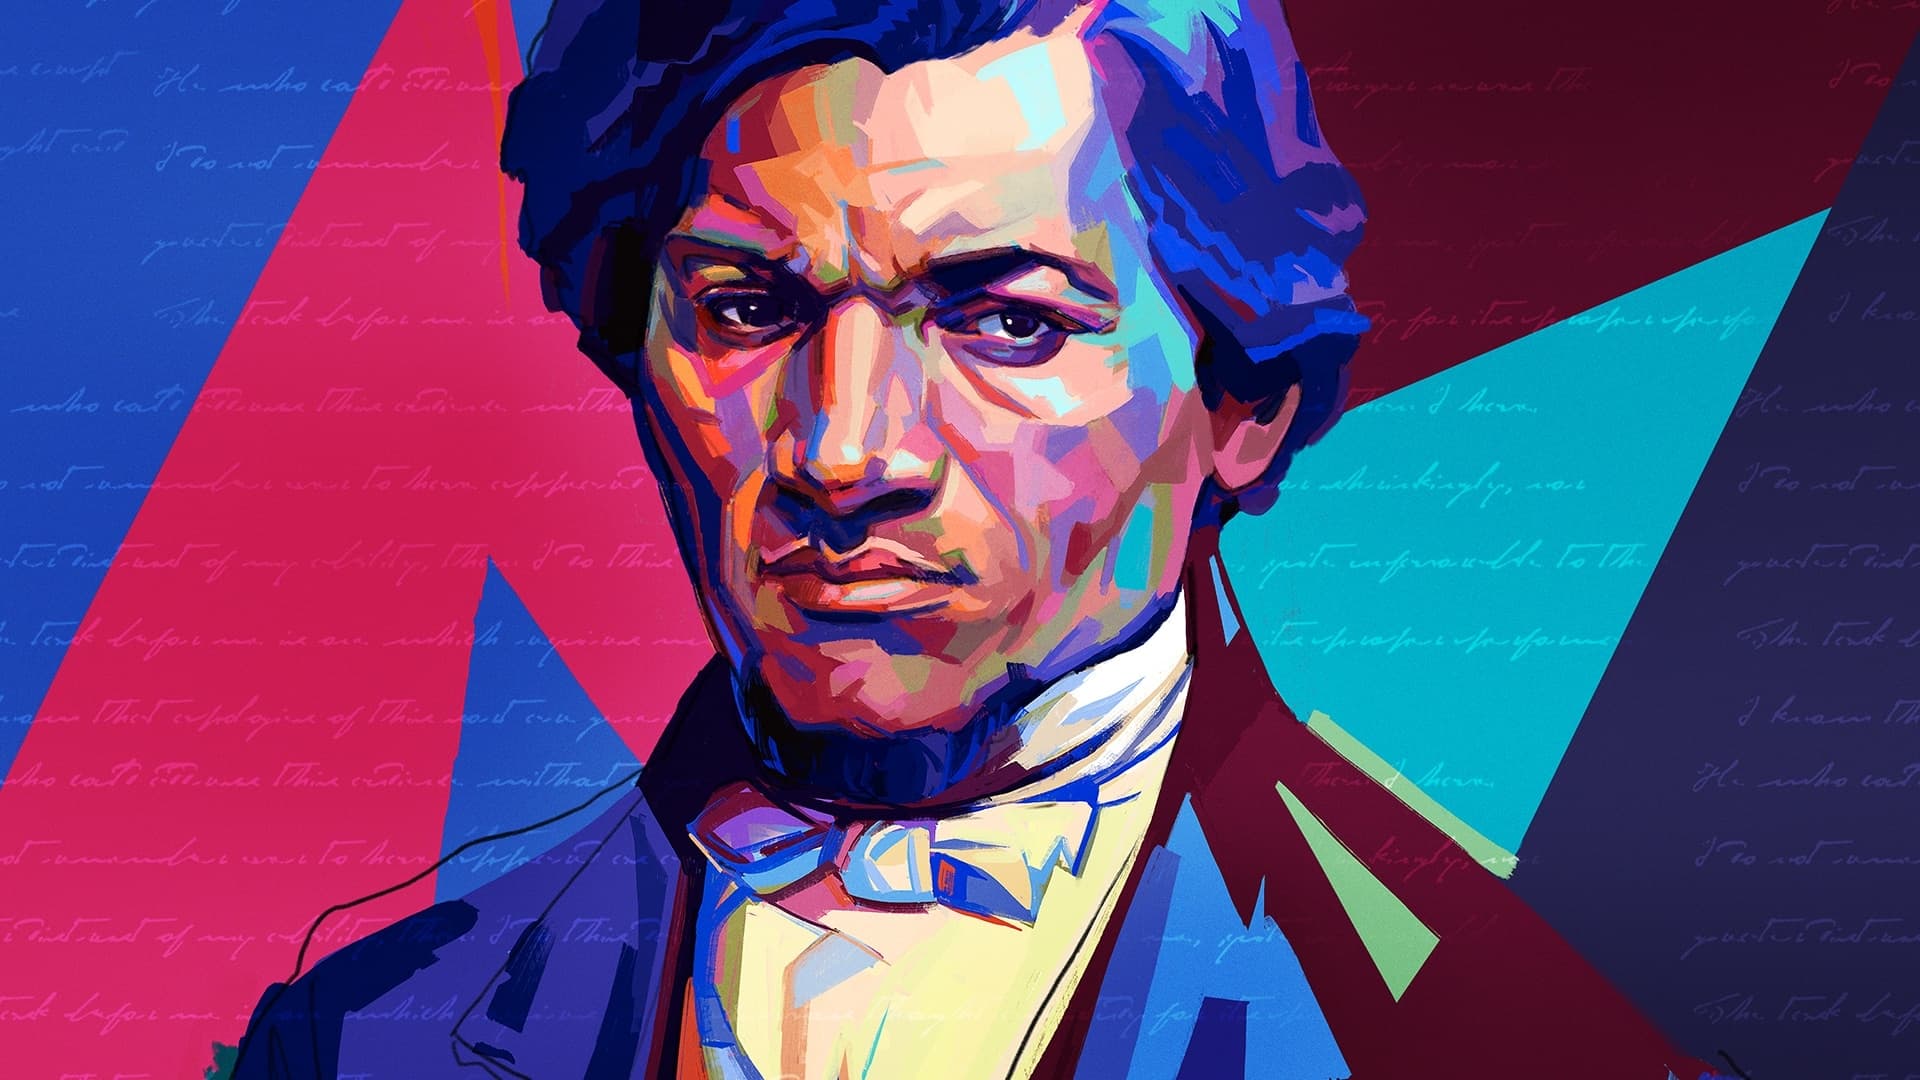 Frederick Douglass: In Five Speeches